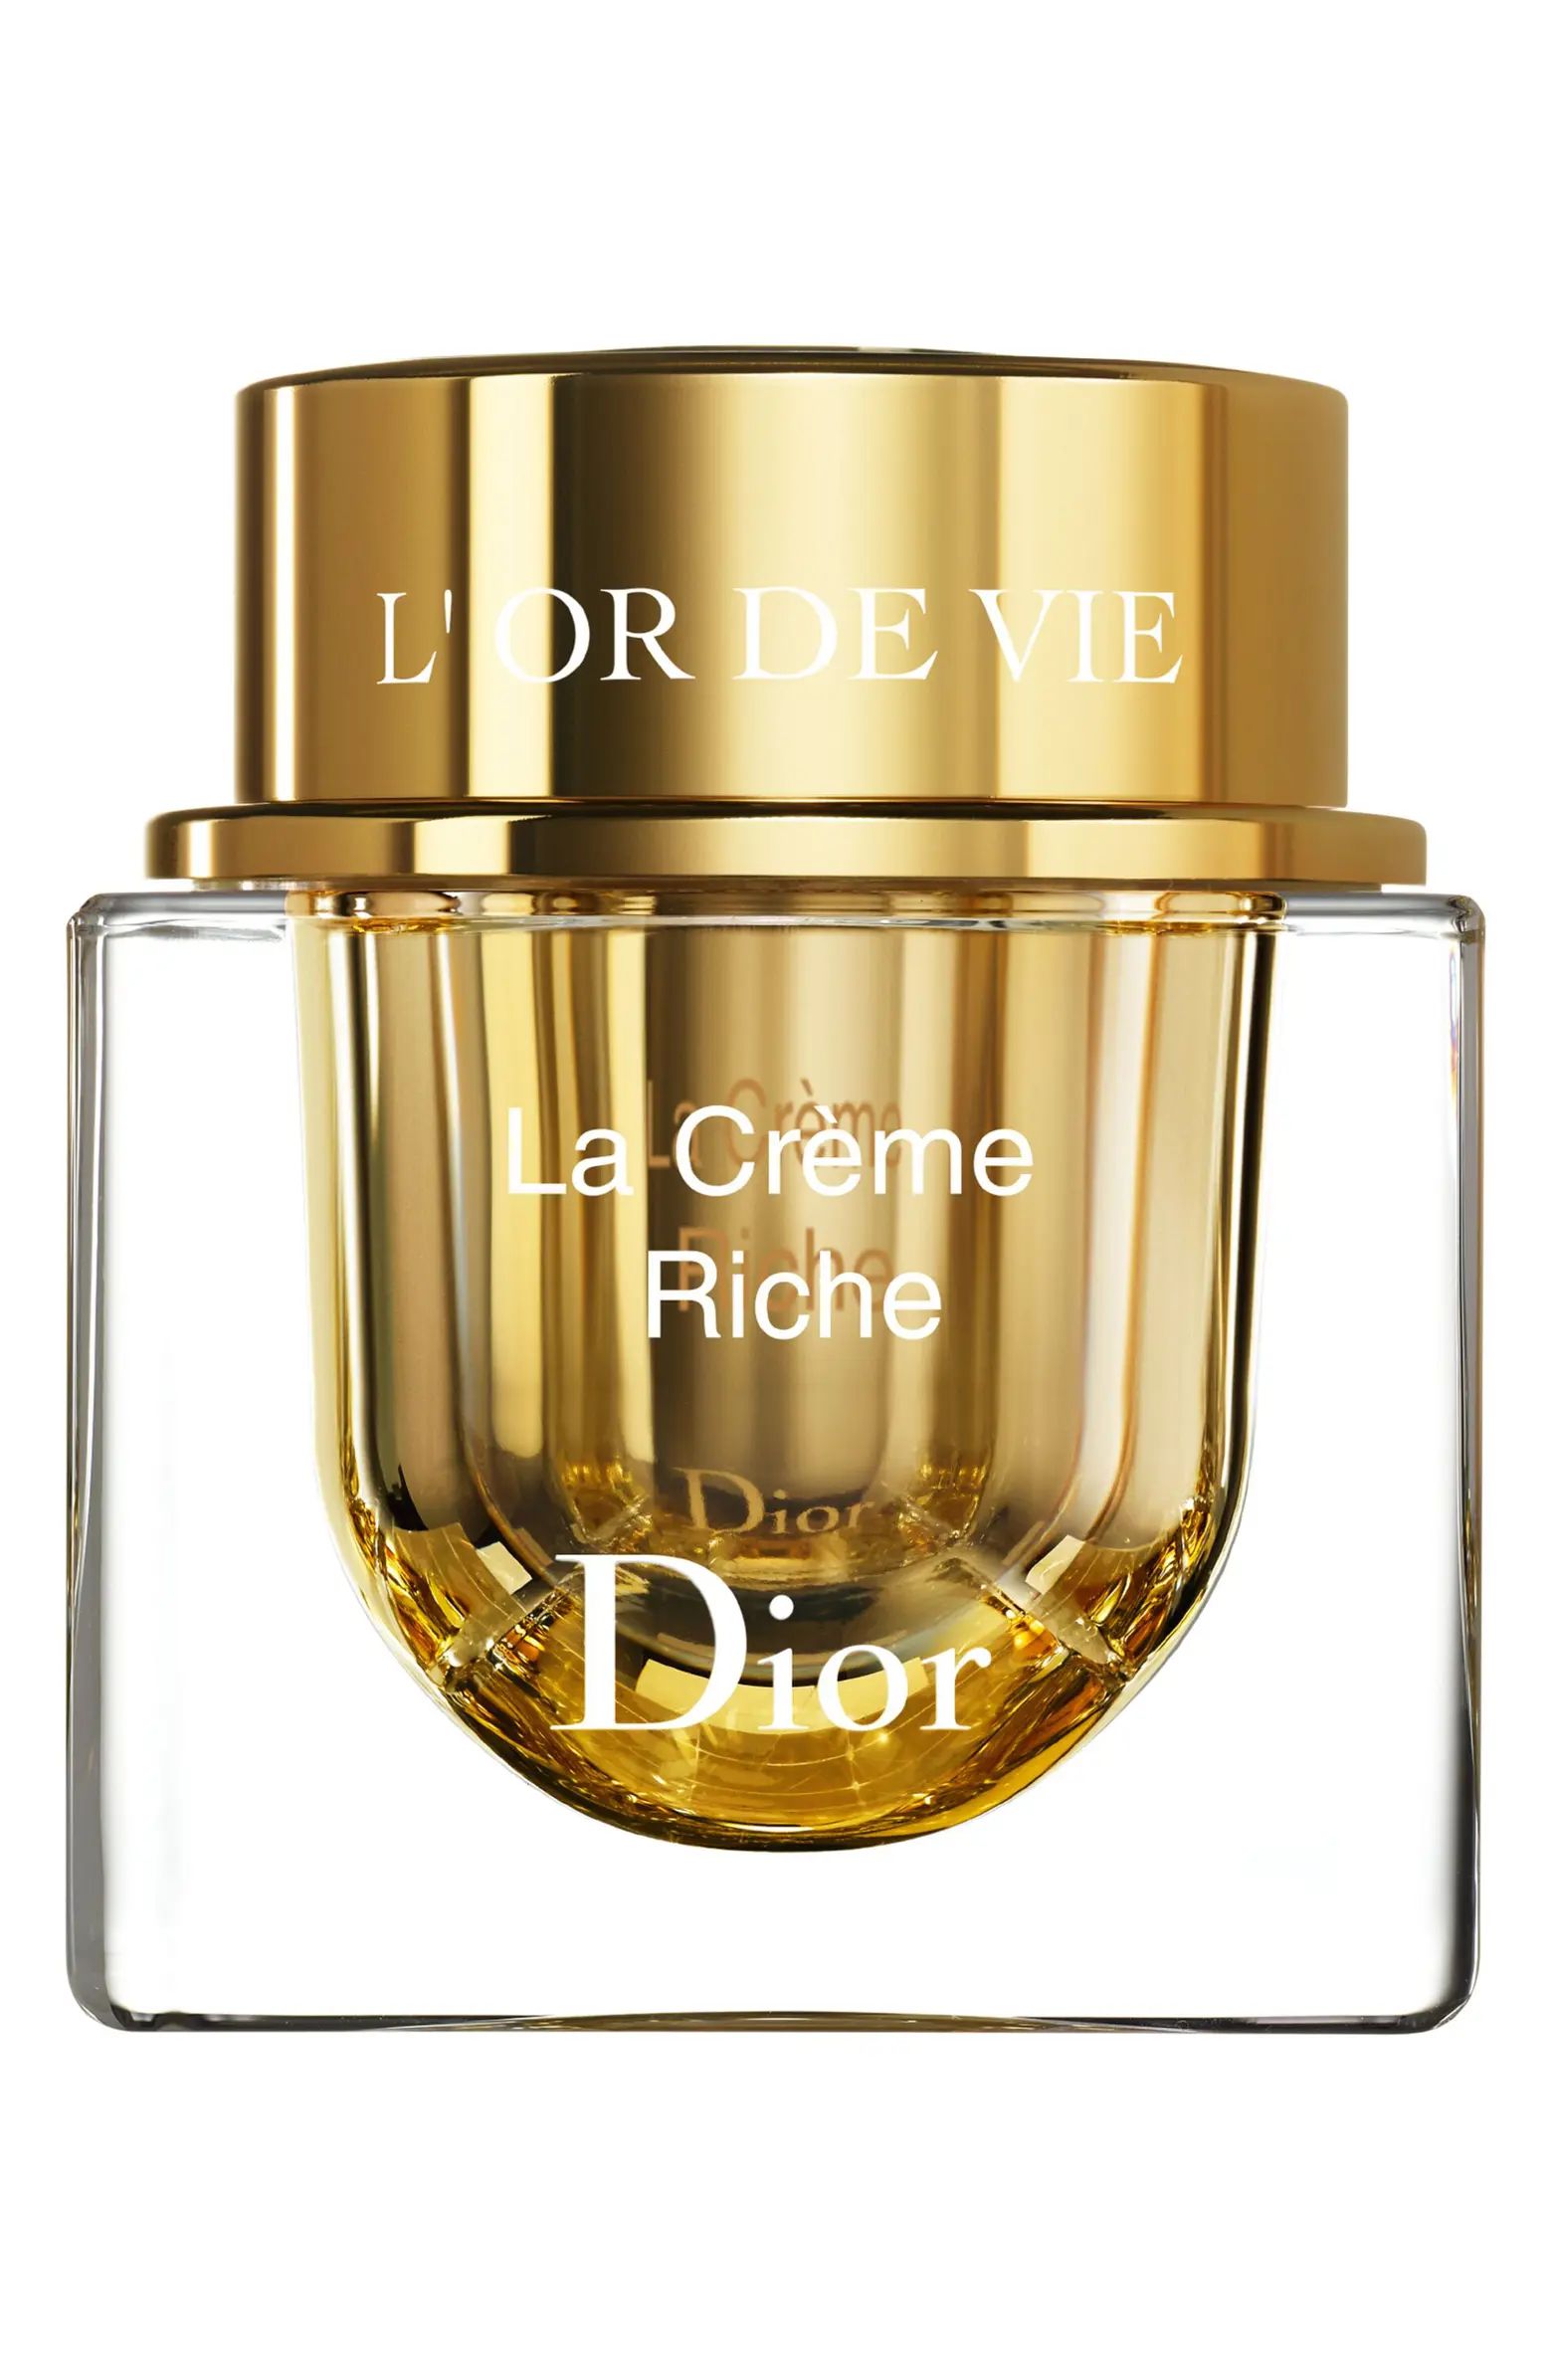 DIOR L'Or de Vie La Crème Riche Face Cream | Nordstrom | Nordstrom